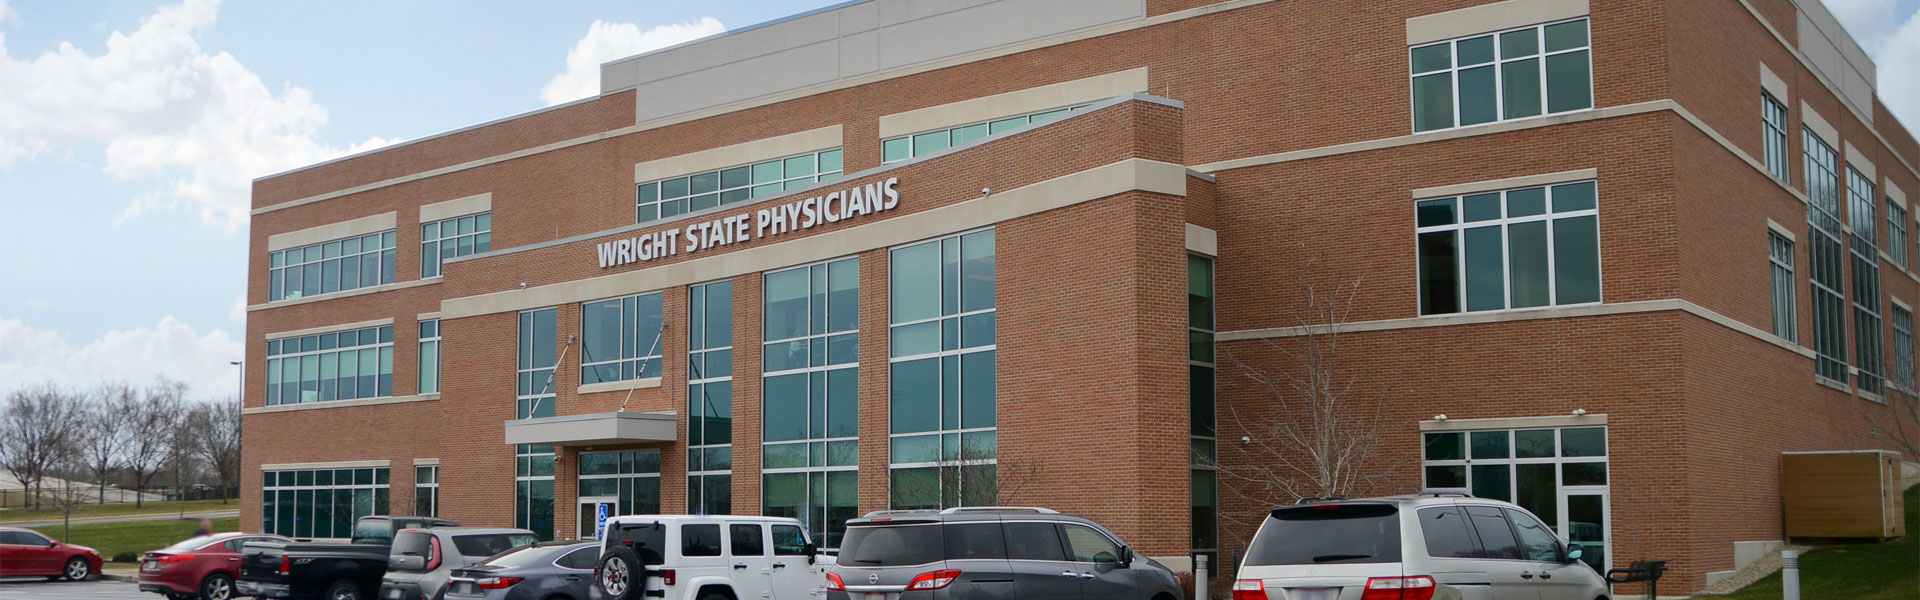 Wright State Univ. - Physicians Bldg